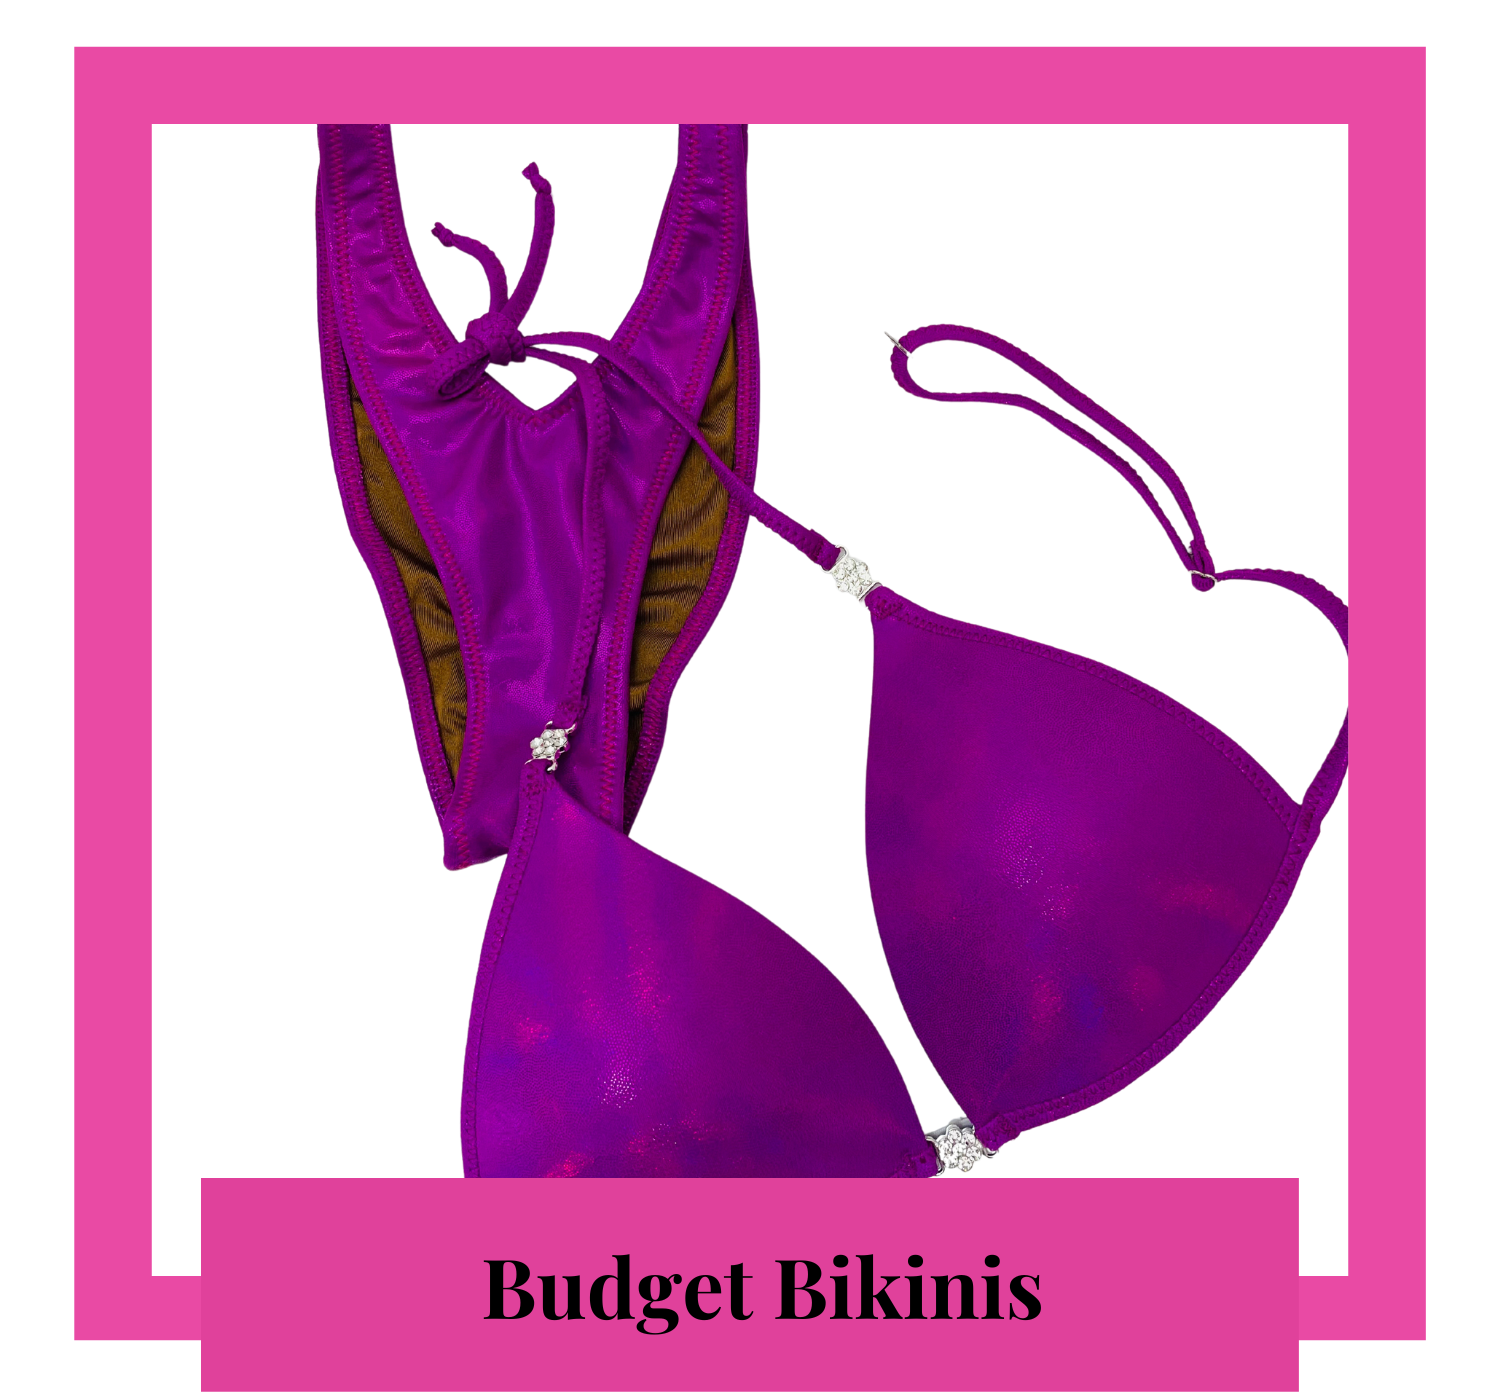 Budget Bikinis